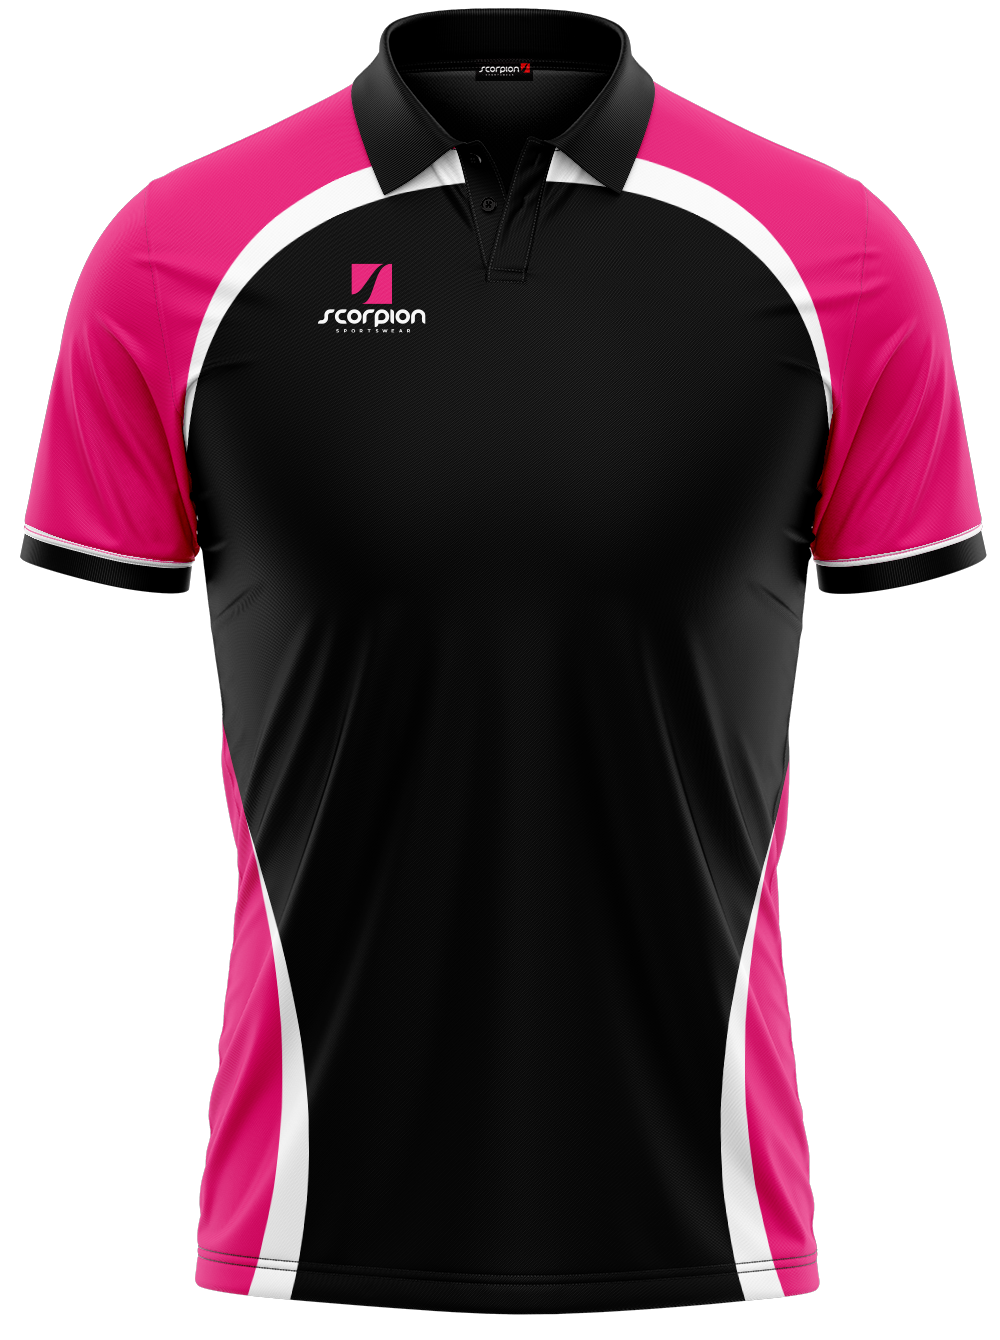 Scorpion Polo Shirts Pattern 2 - Black/Pink/White